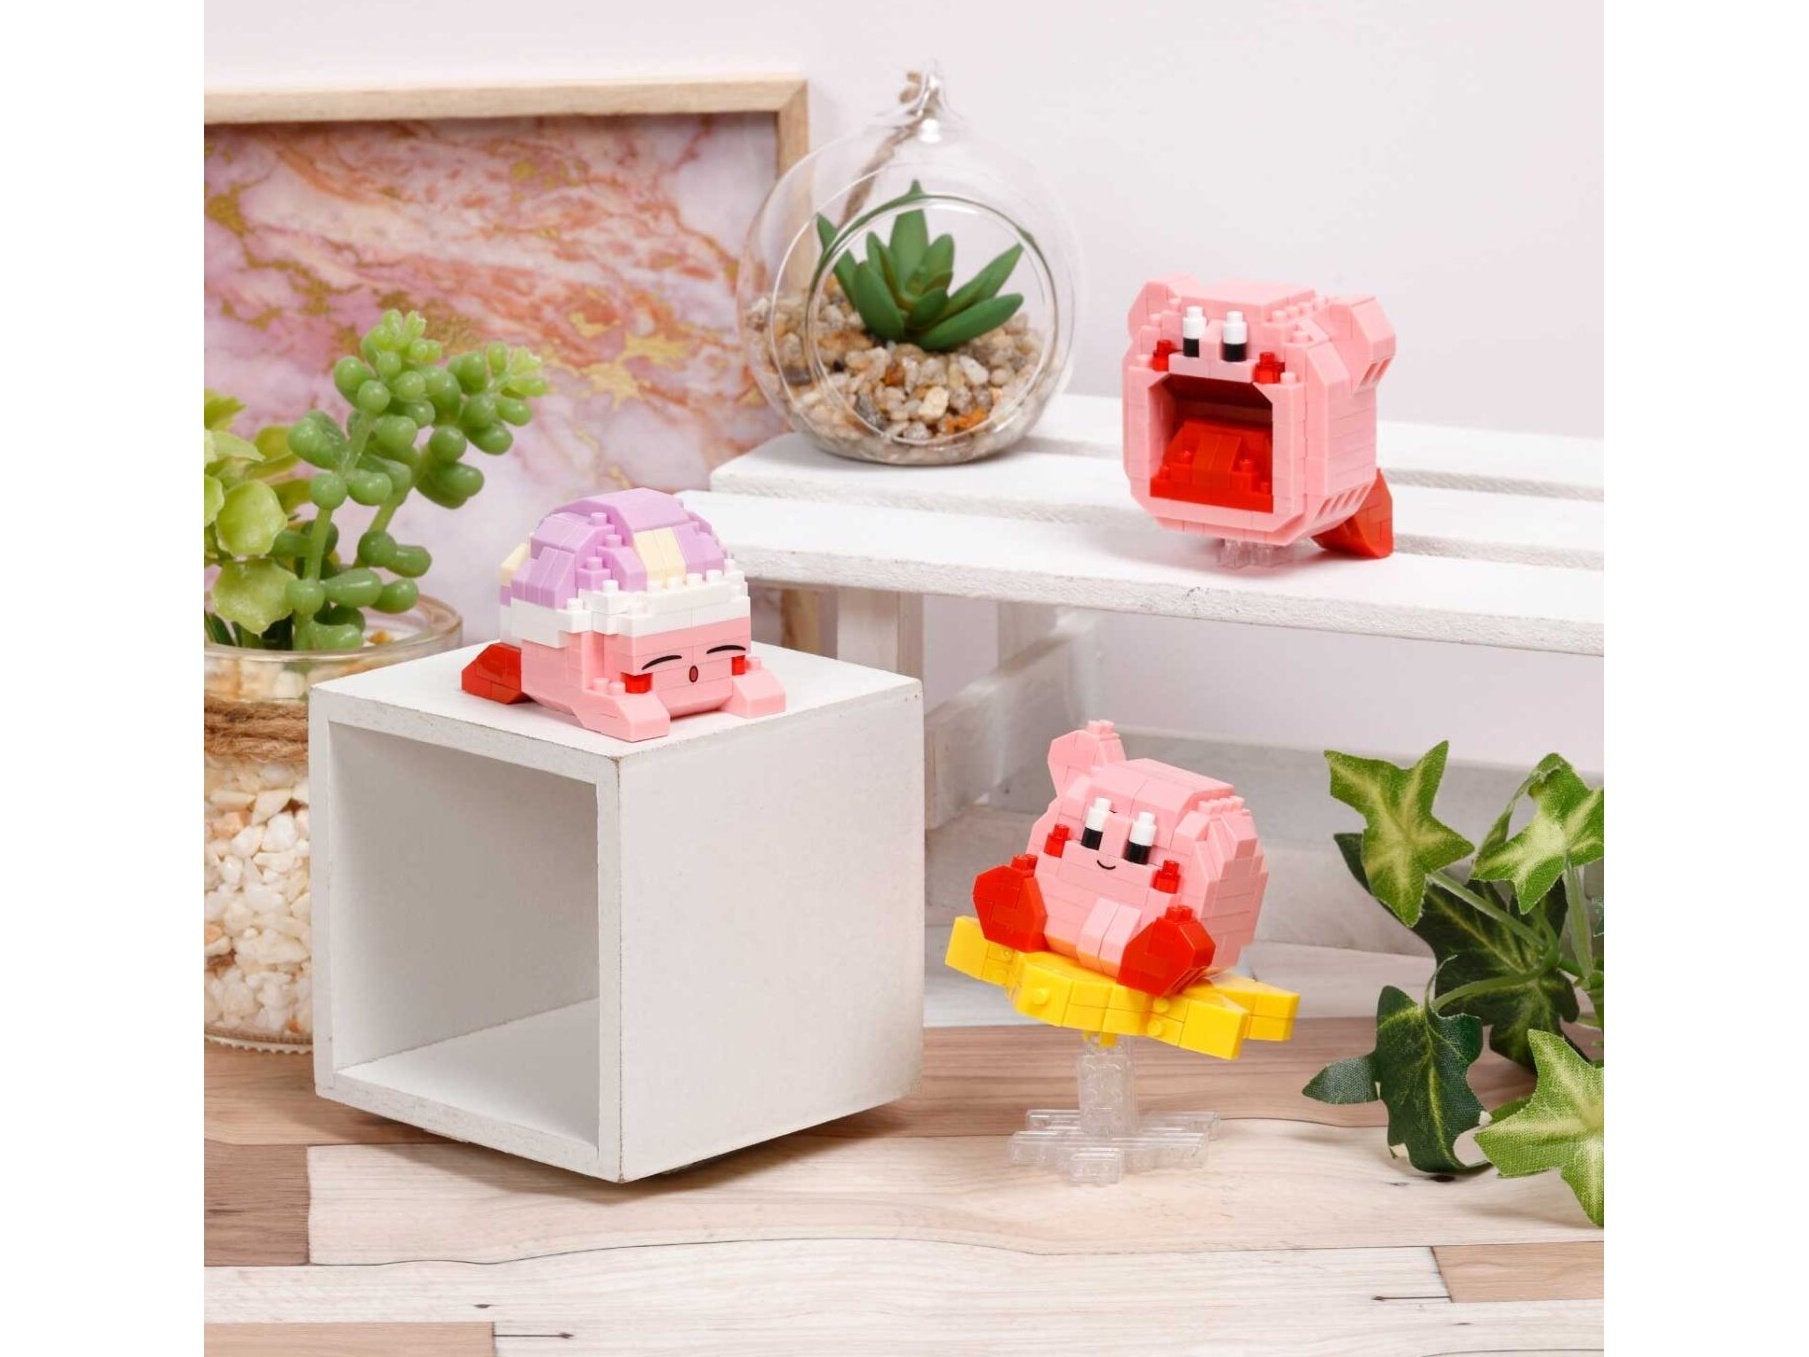 Nanoblock Kirby - Kirby